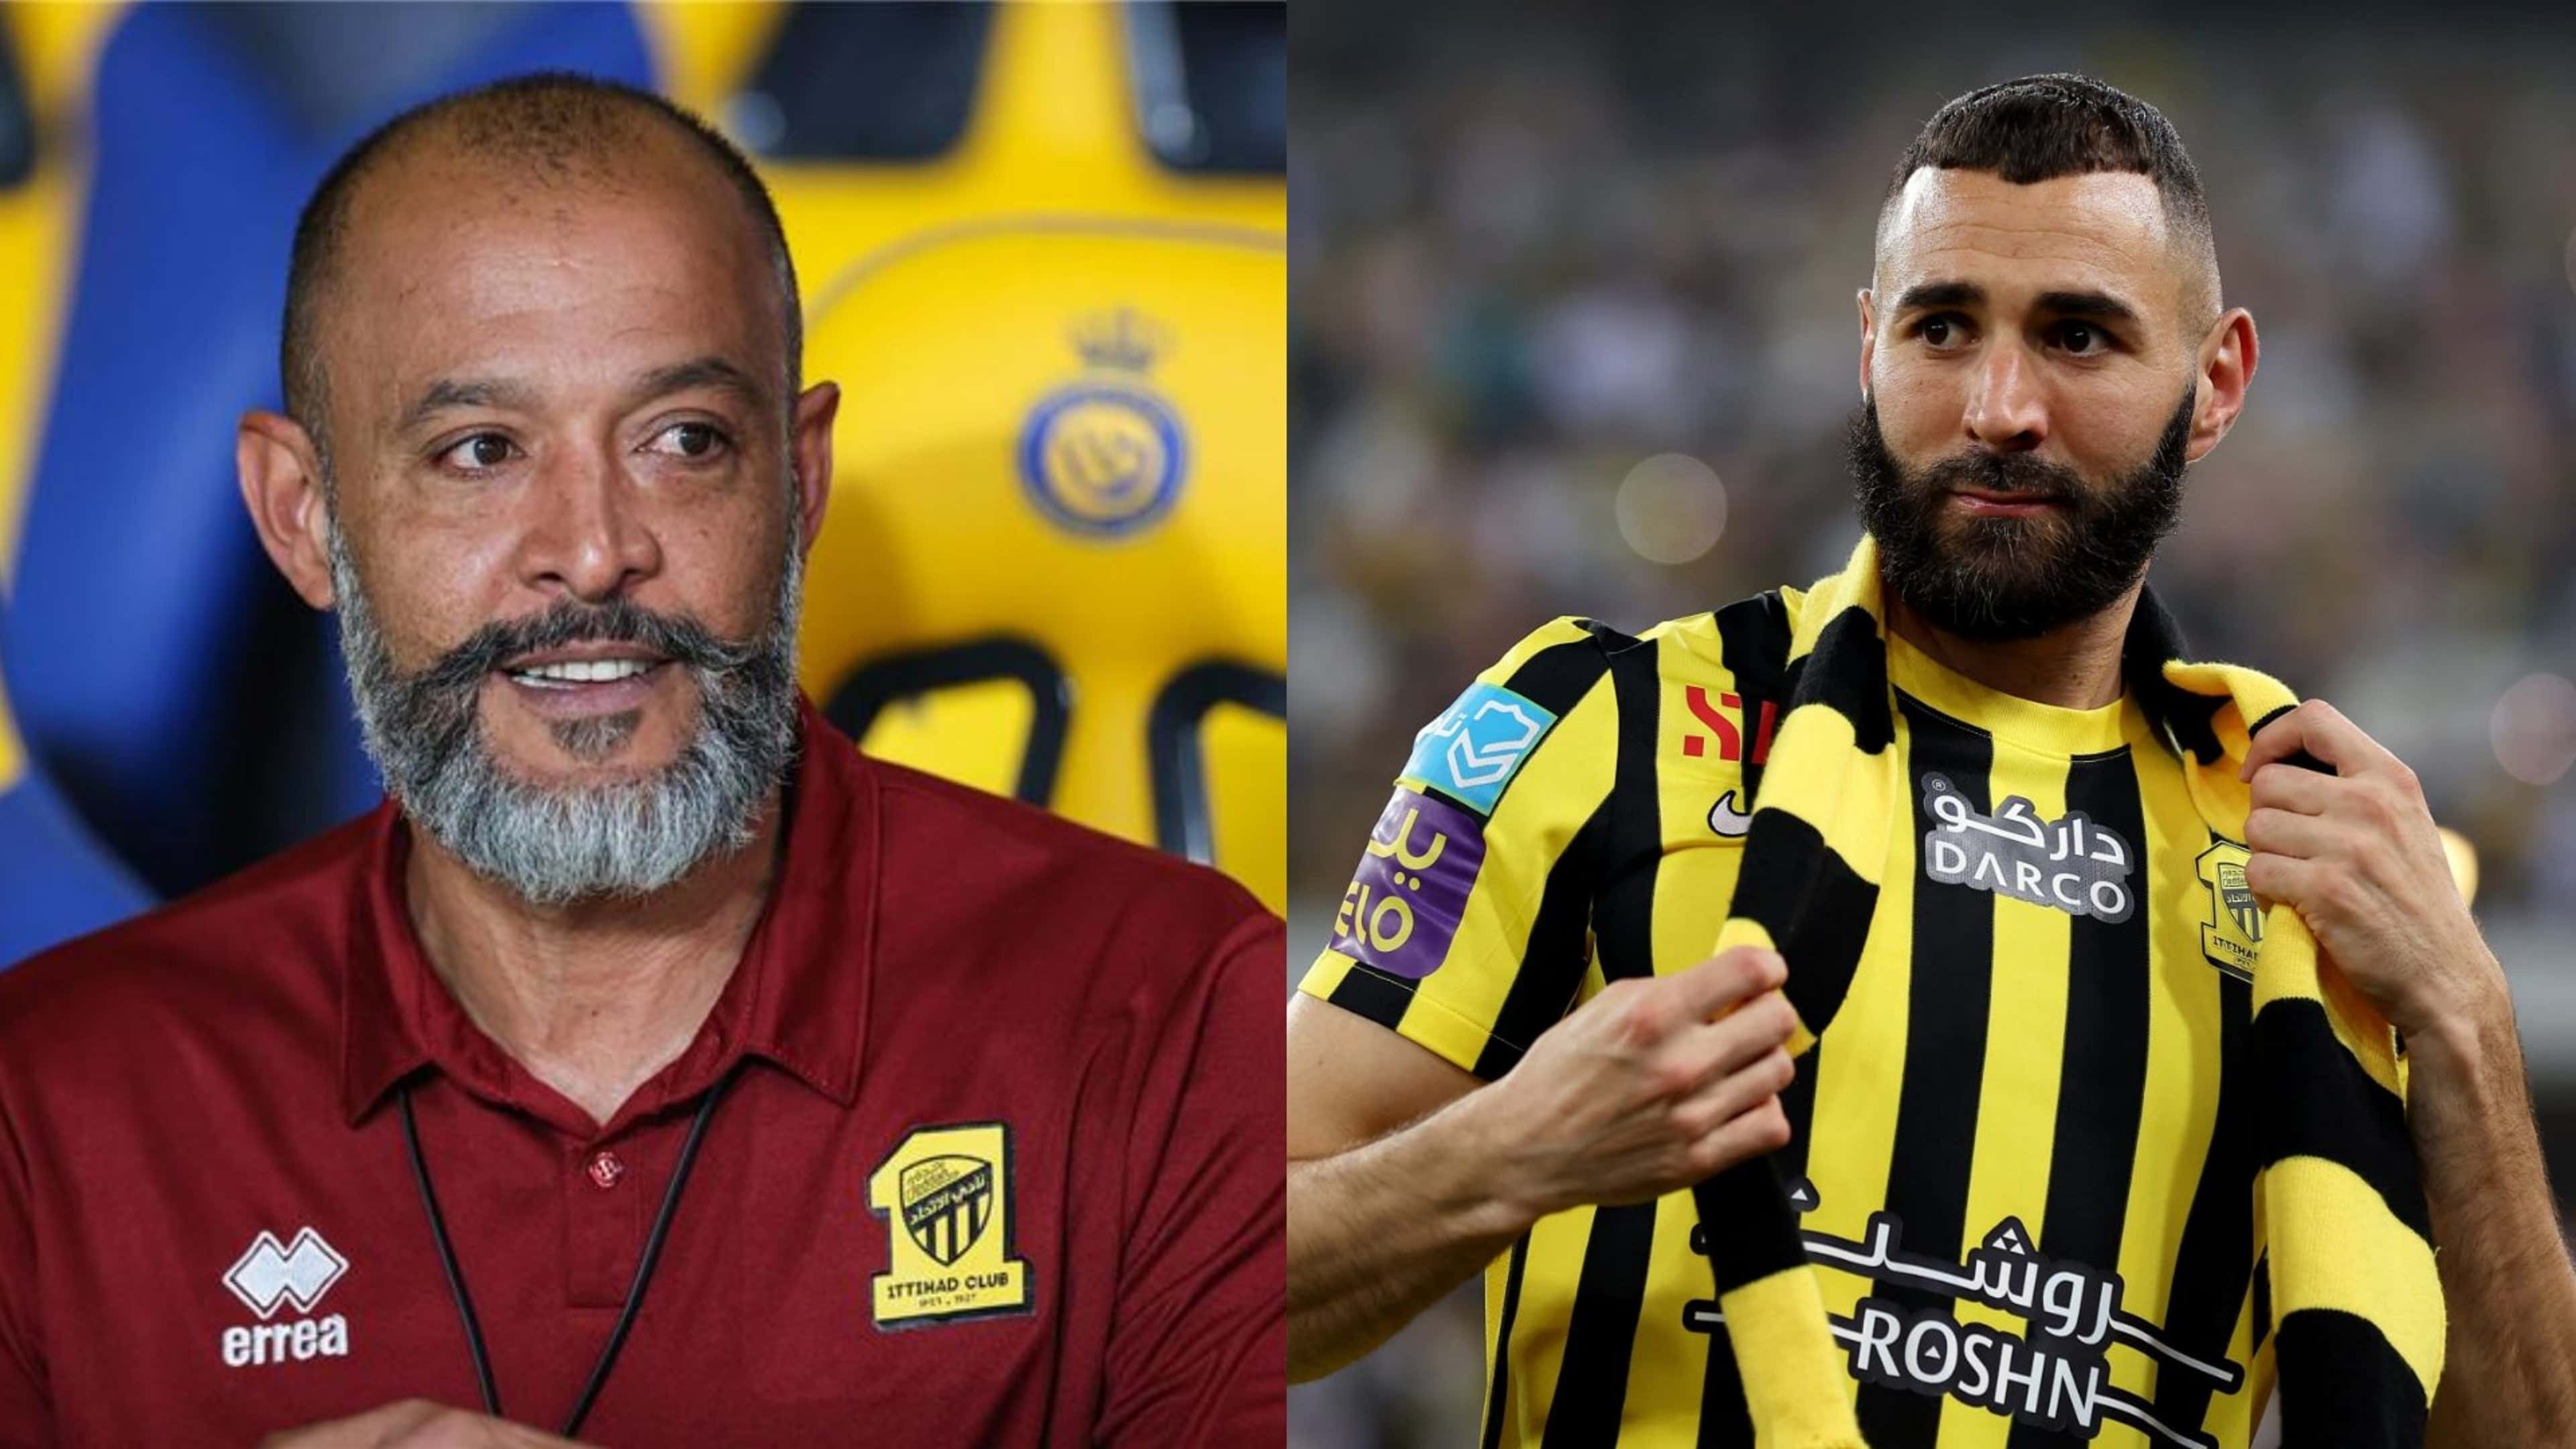 Explained: Why Karim Benzema's Al-Ittihad refused to take to field